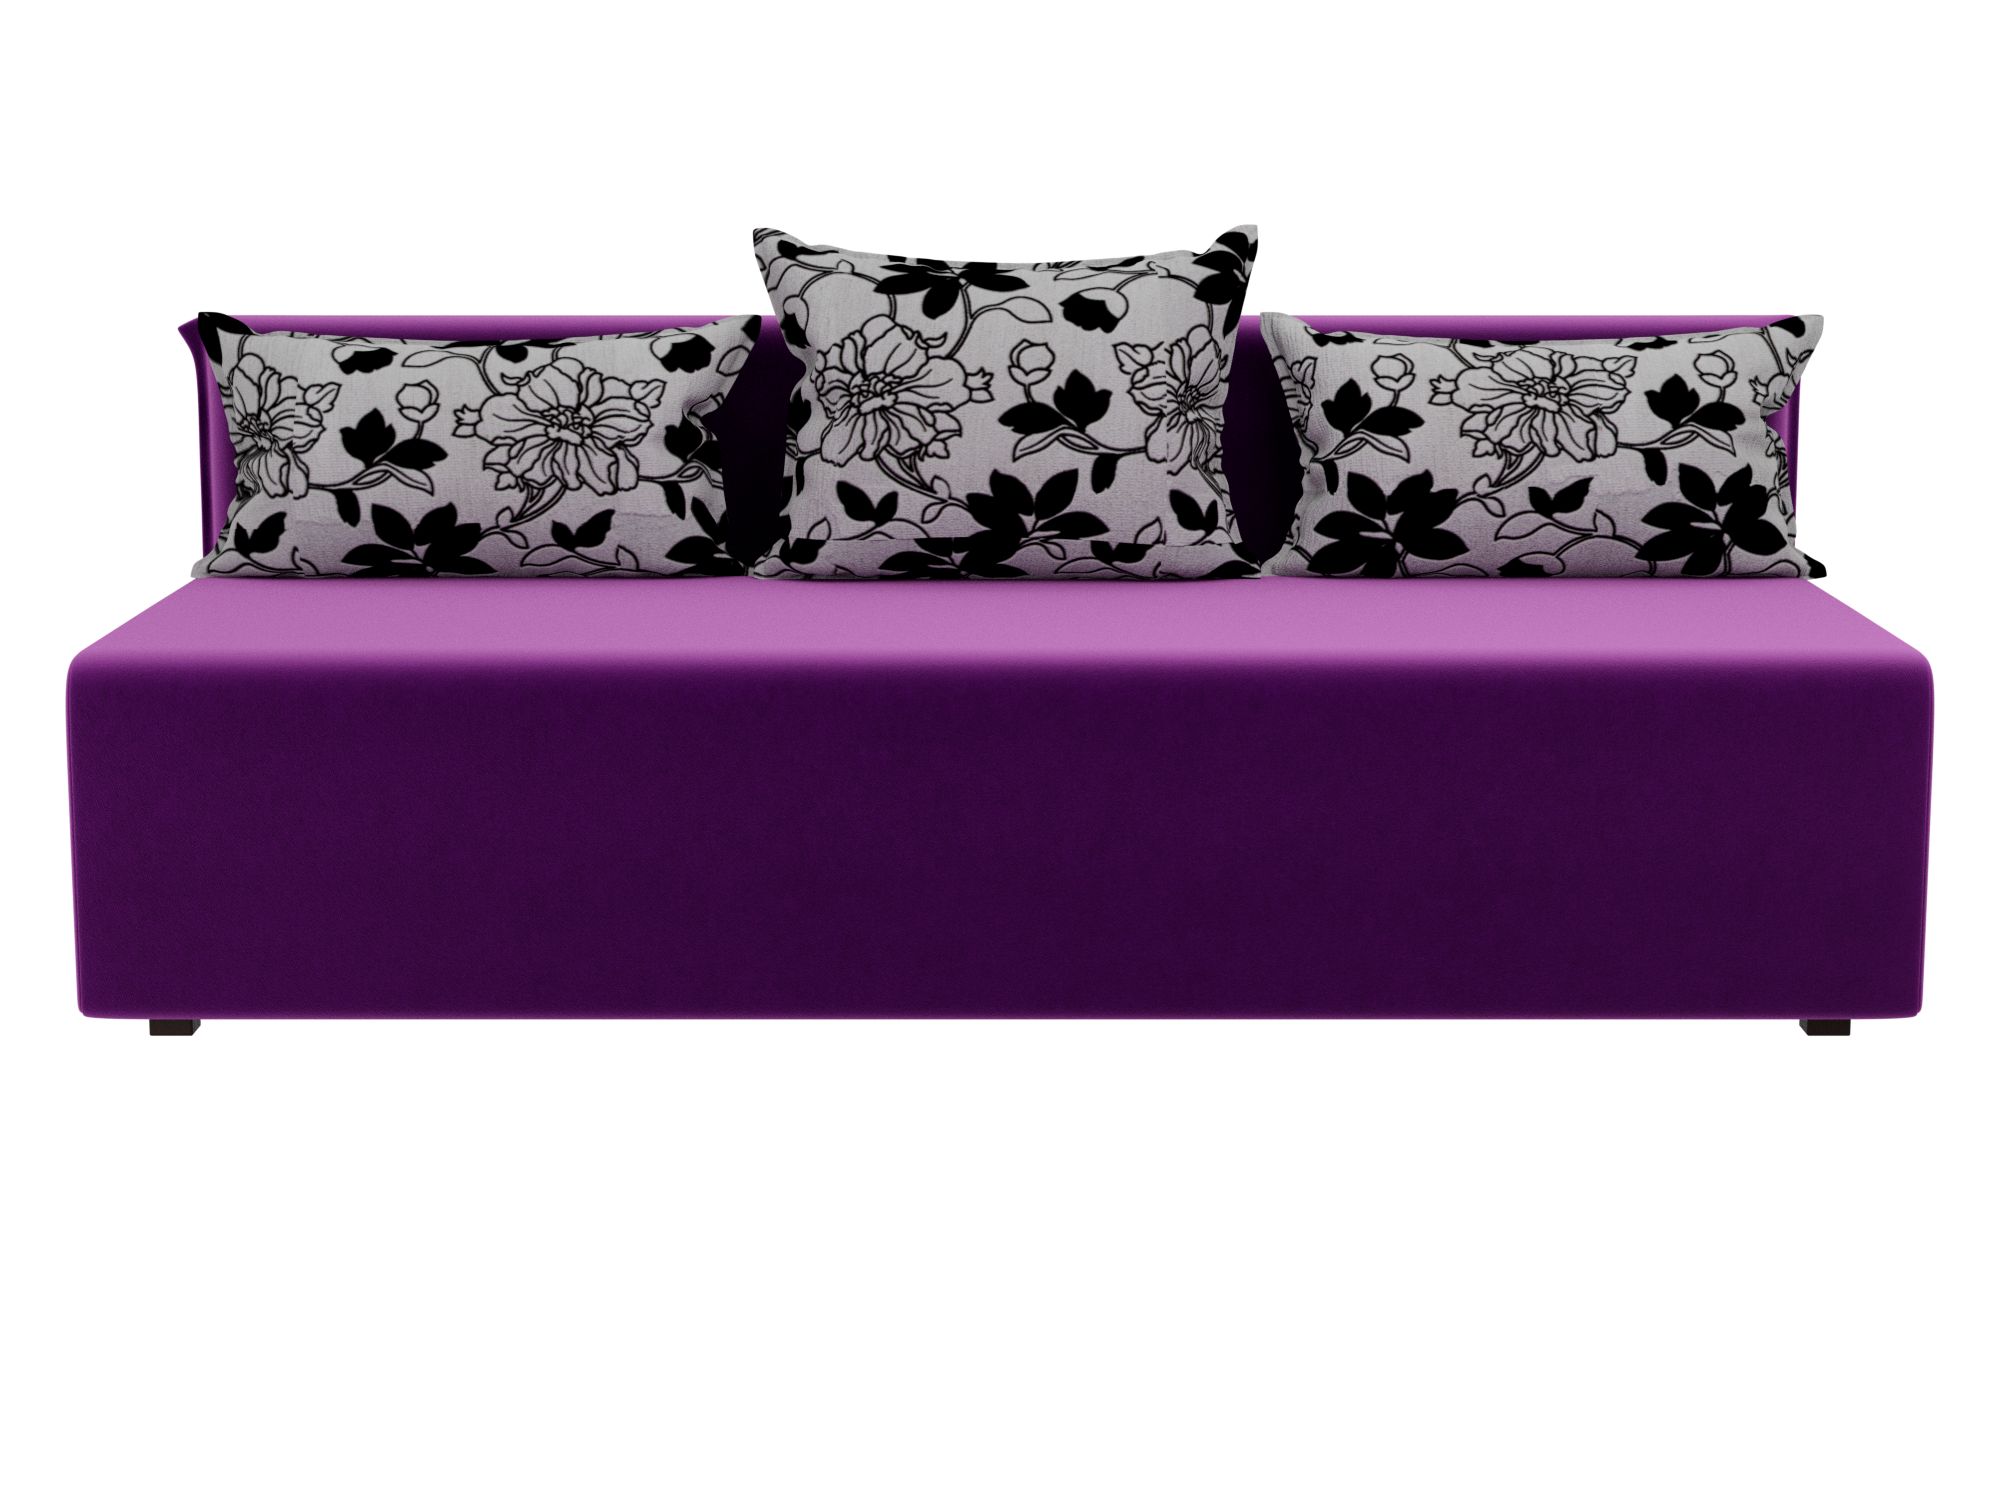 Диван Кесада MebelVia Фиолетовый, Микровельвет, ЛДСП диван еврокнижка мебелико сатурн микровельвет фиолетовый